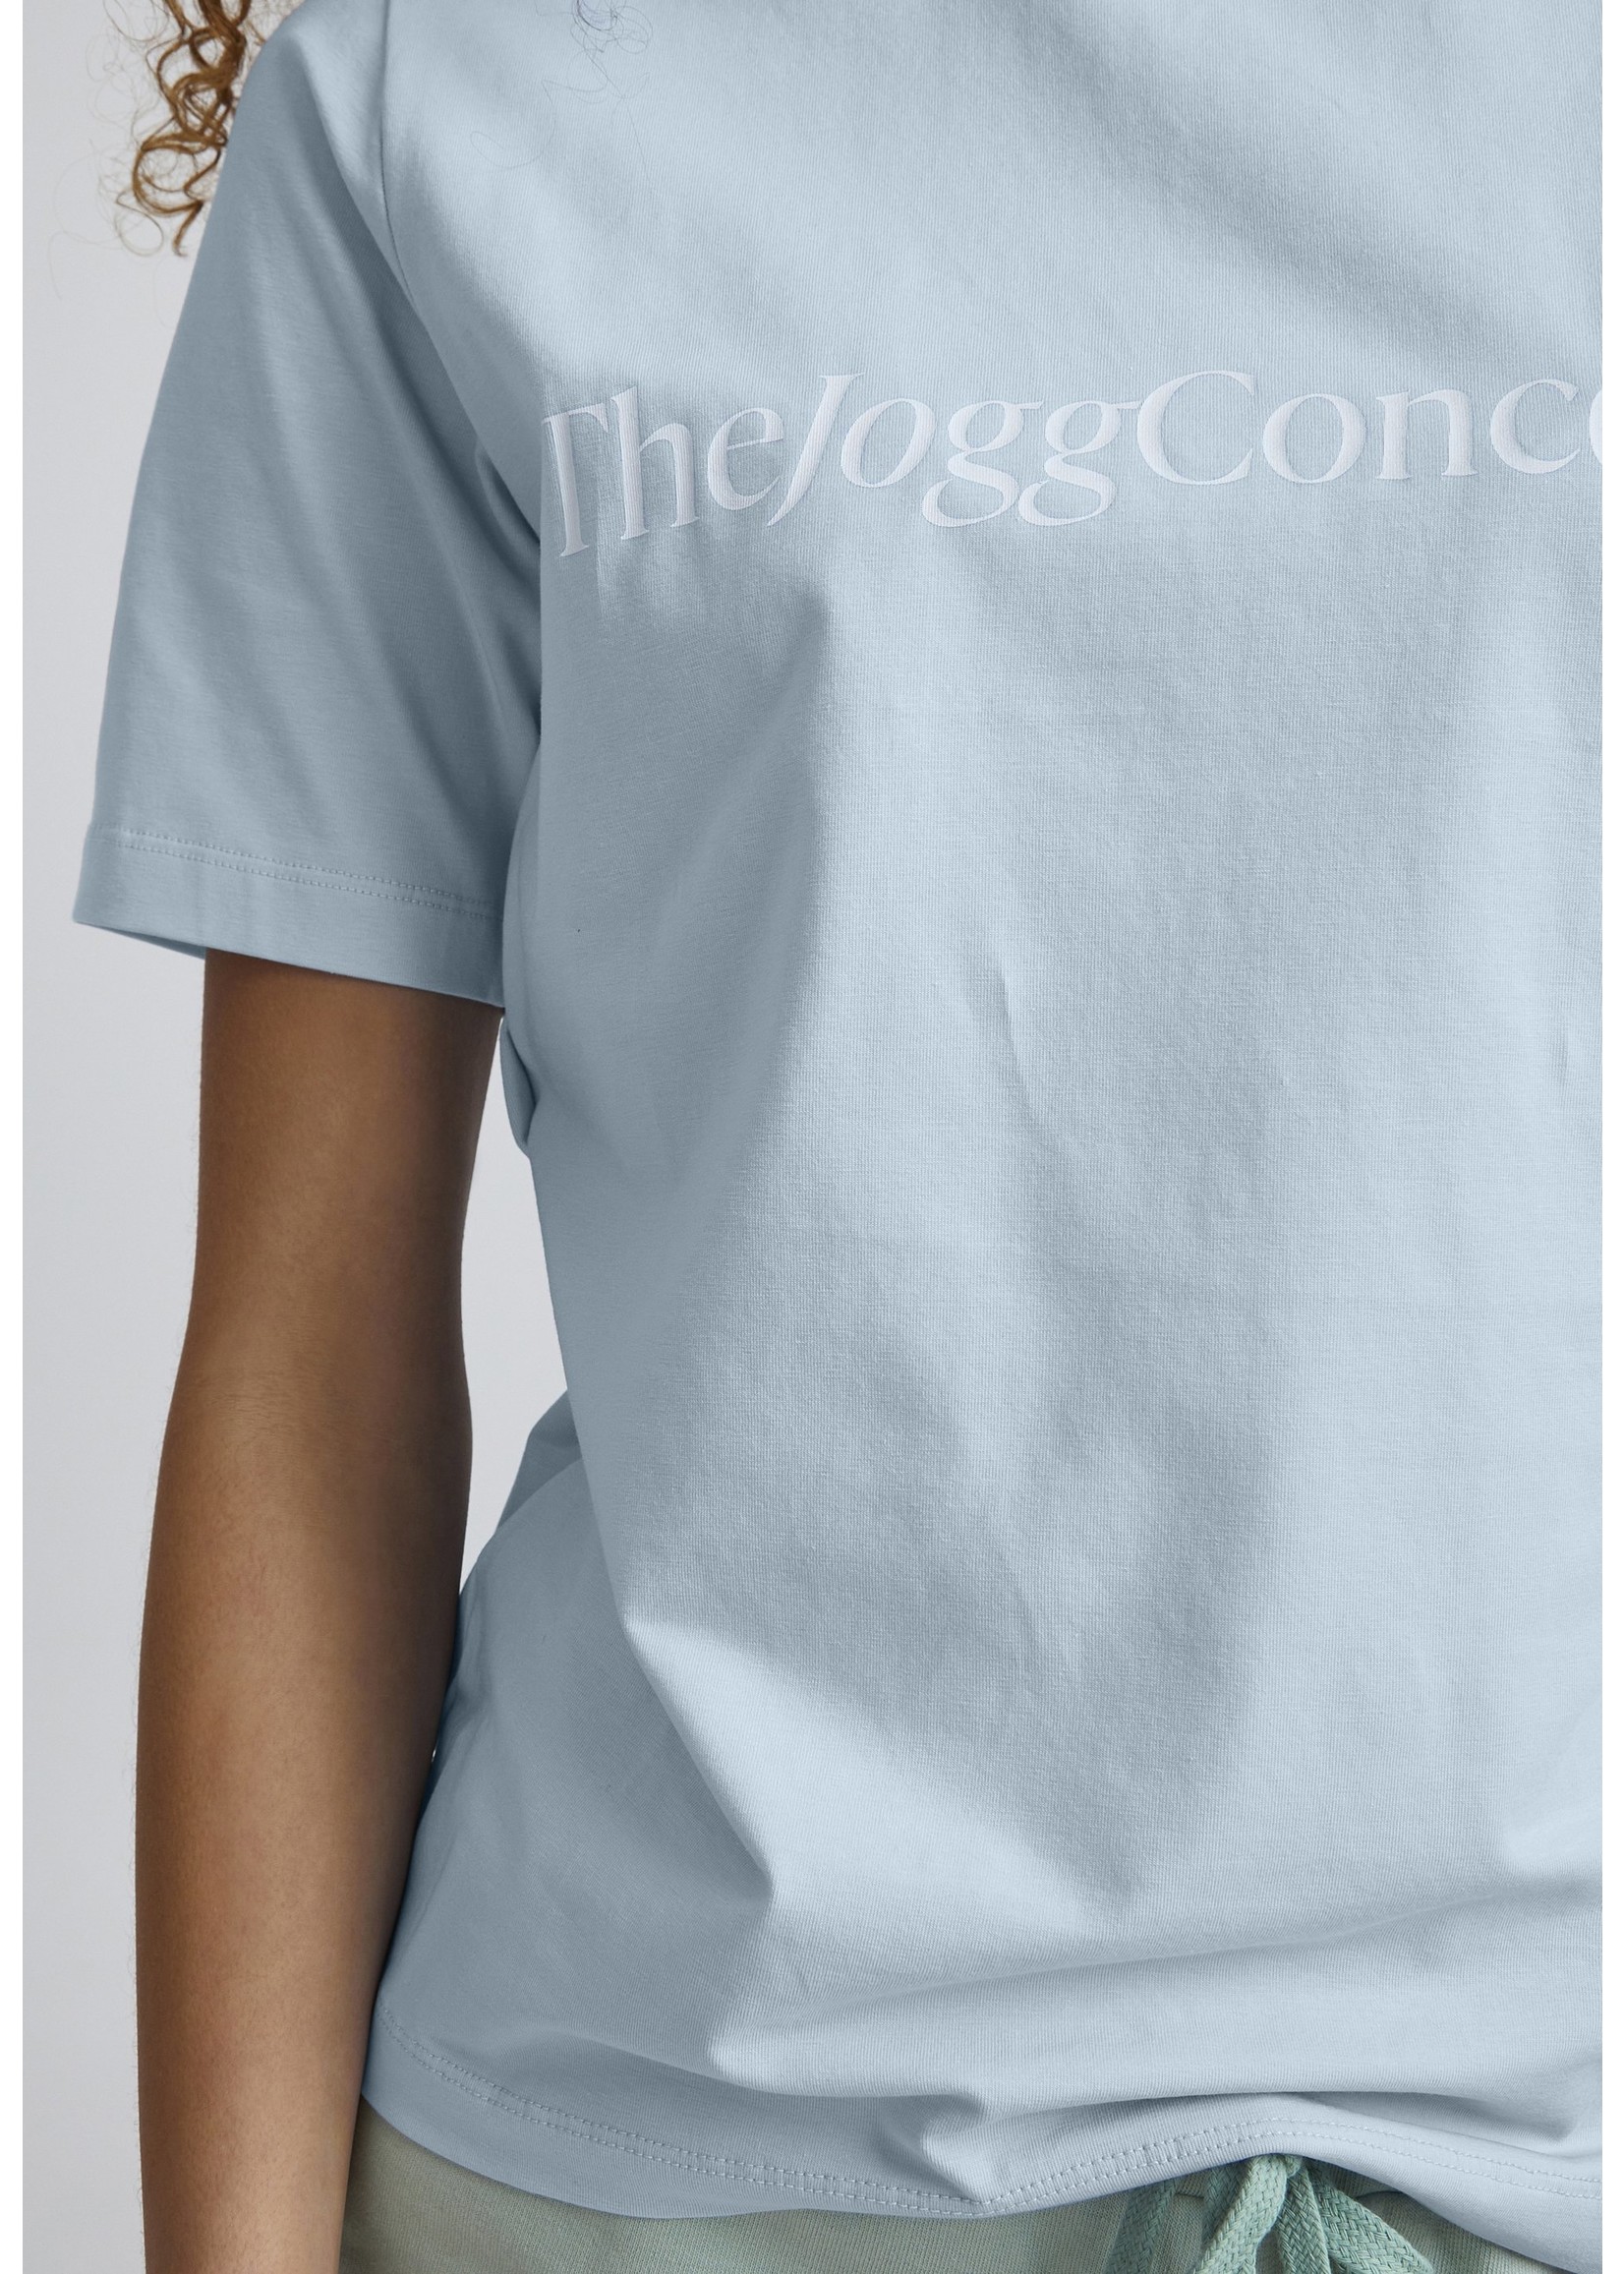 TheJoggConcept Jcsimona Logo Tshirt